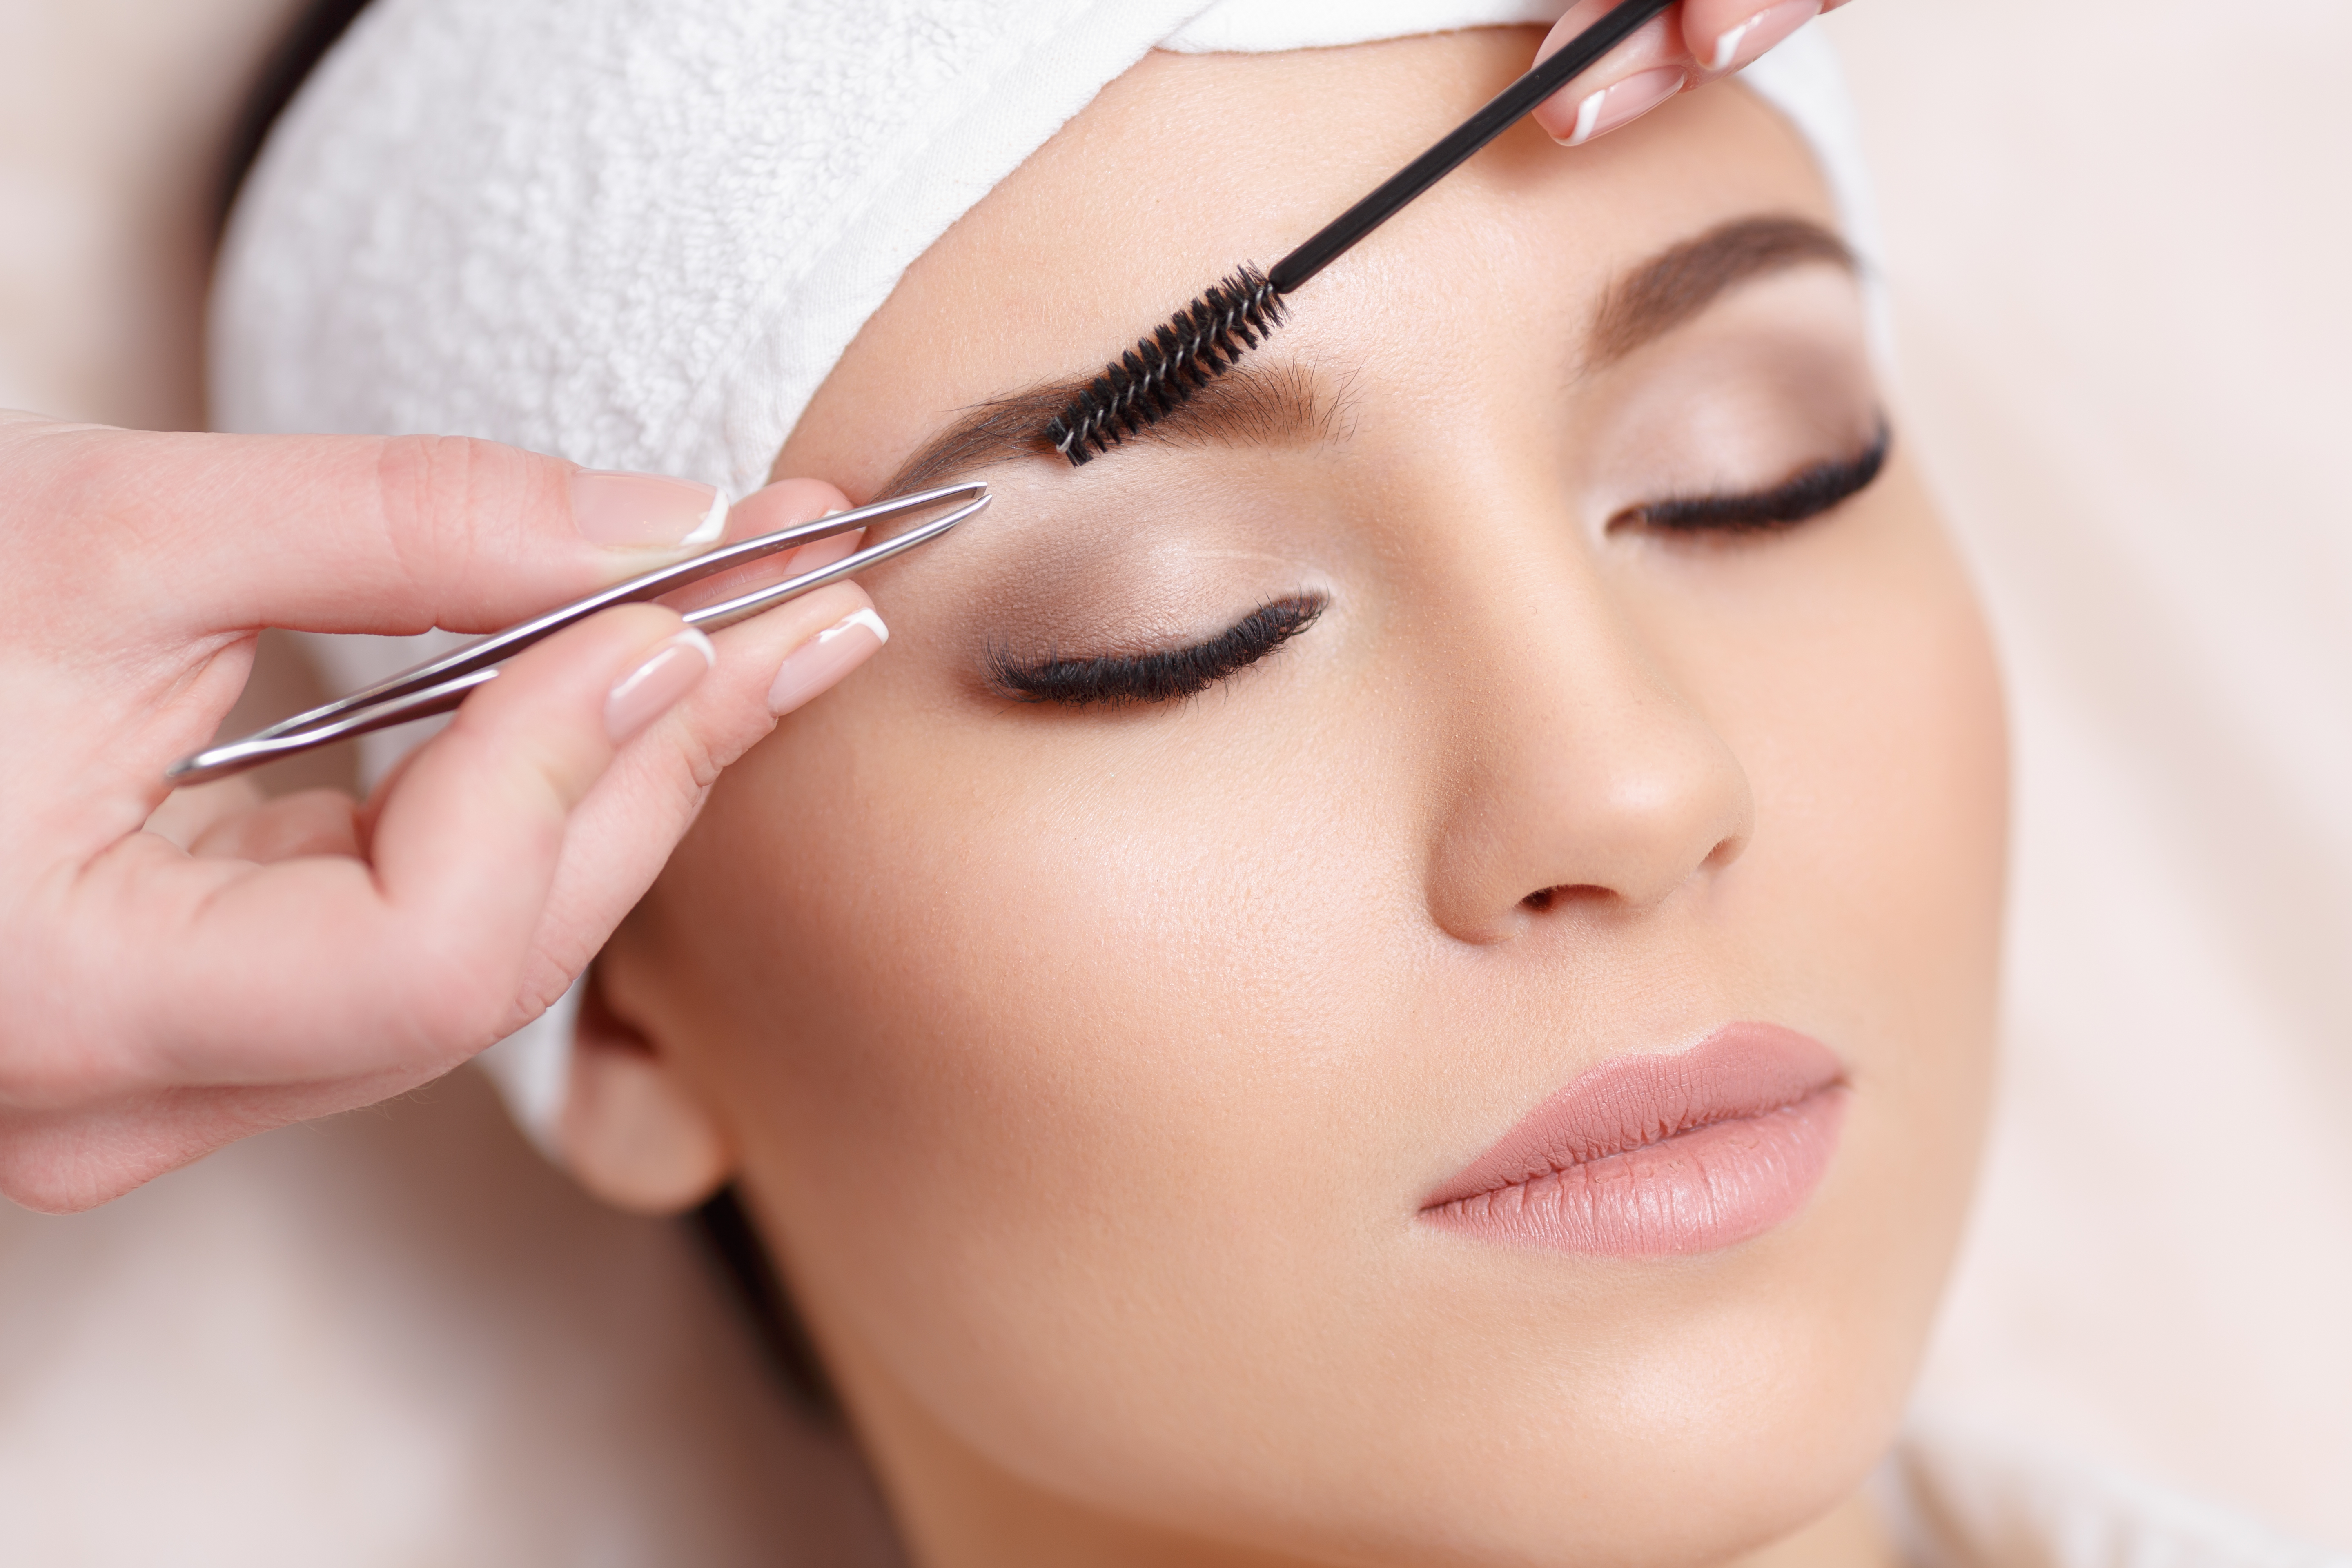 Eyebrow and eyelash treatments at Belmed